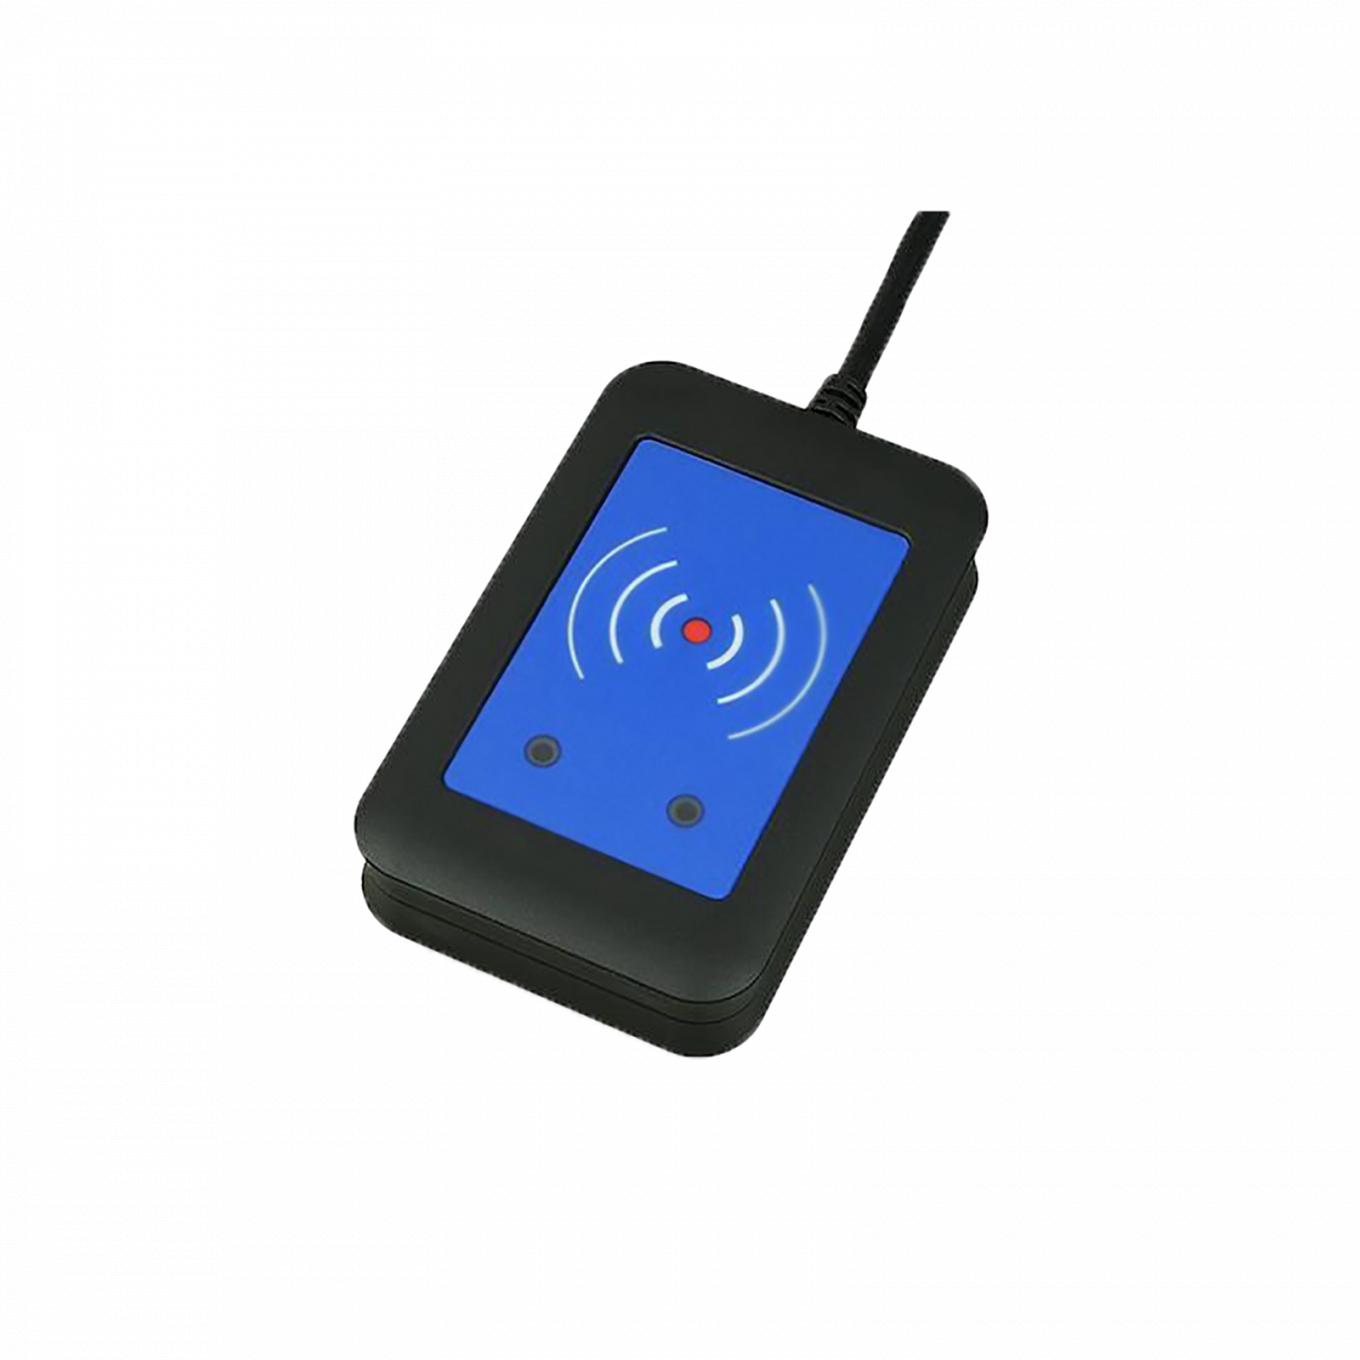 Leitor RFID externo protegido de 13,56 MHz + 125 kHz, interface USB, visto de frente